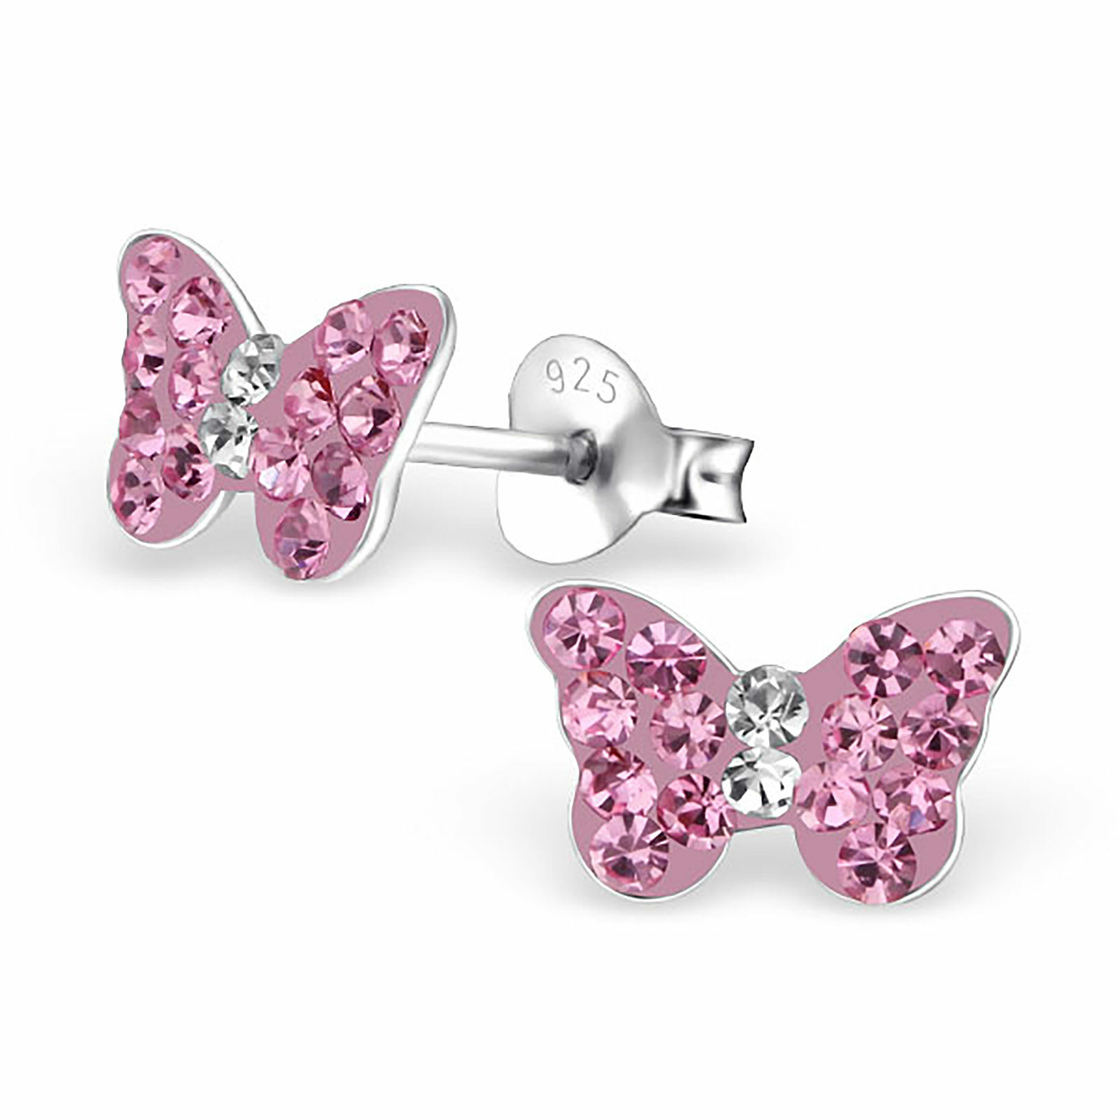 Echt 925 Silber Ohrhänger Schmetterling türkis/pink Ohrringe Mädchen Neu & OVP 